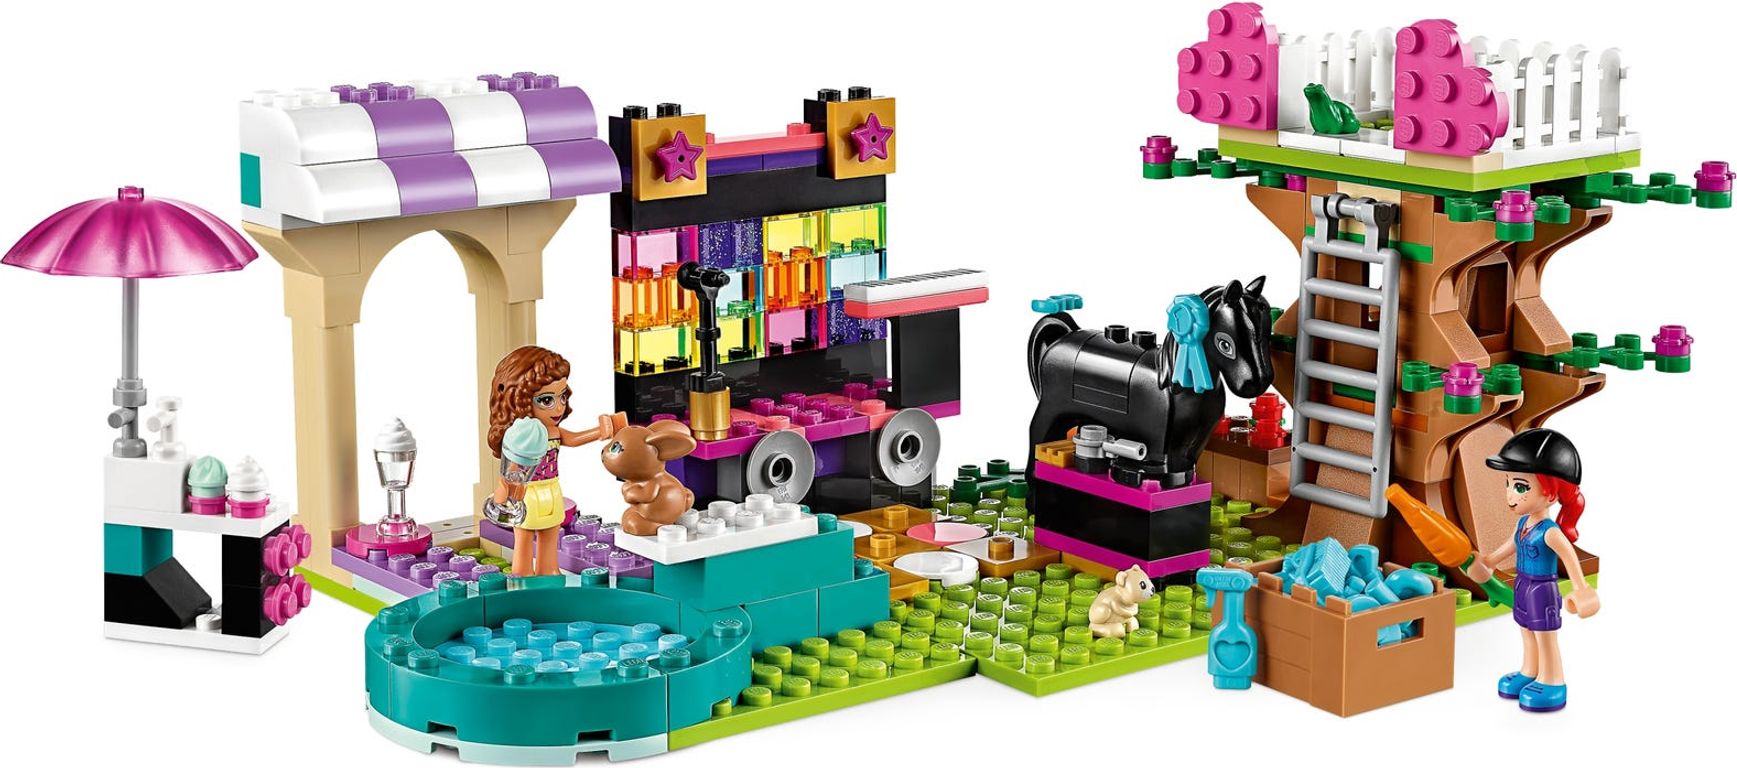 LEGO® Friends Heartlake City Brick Box components